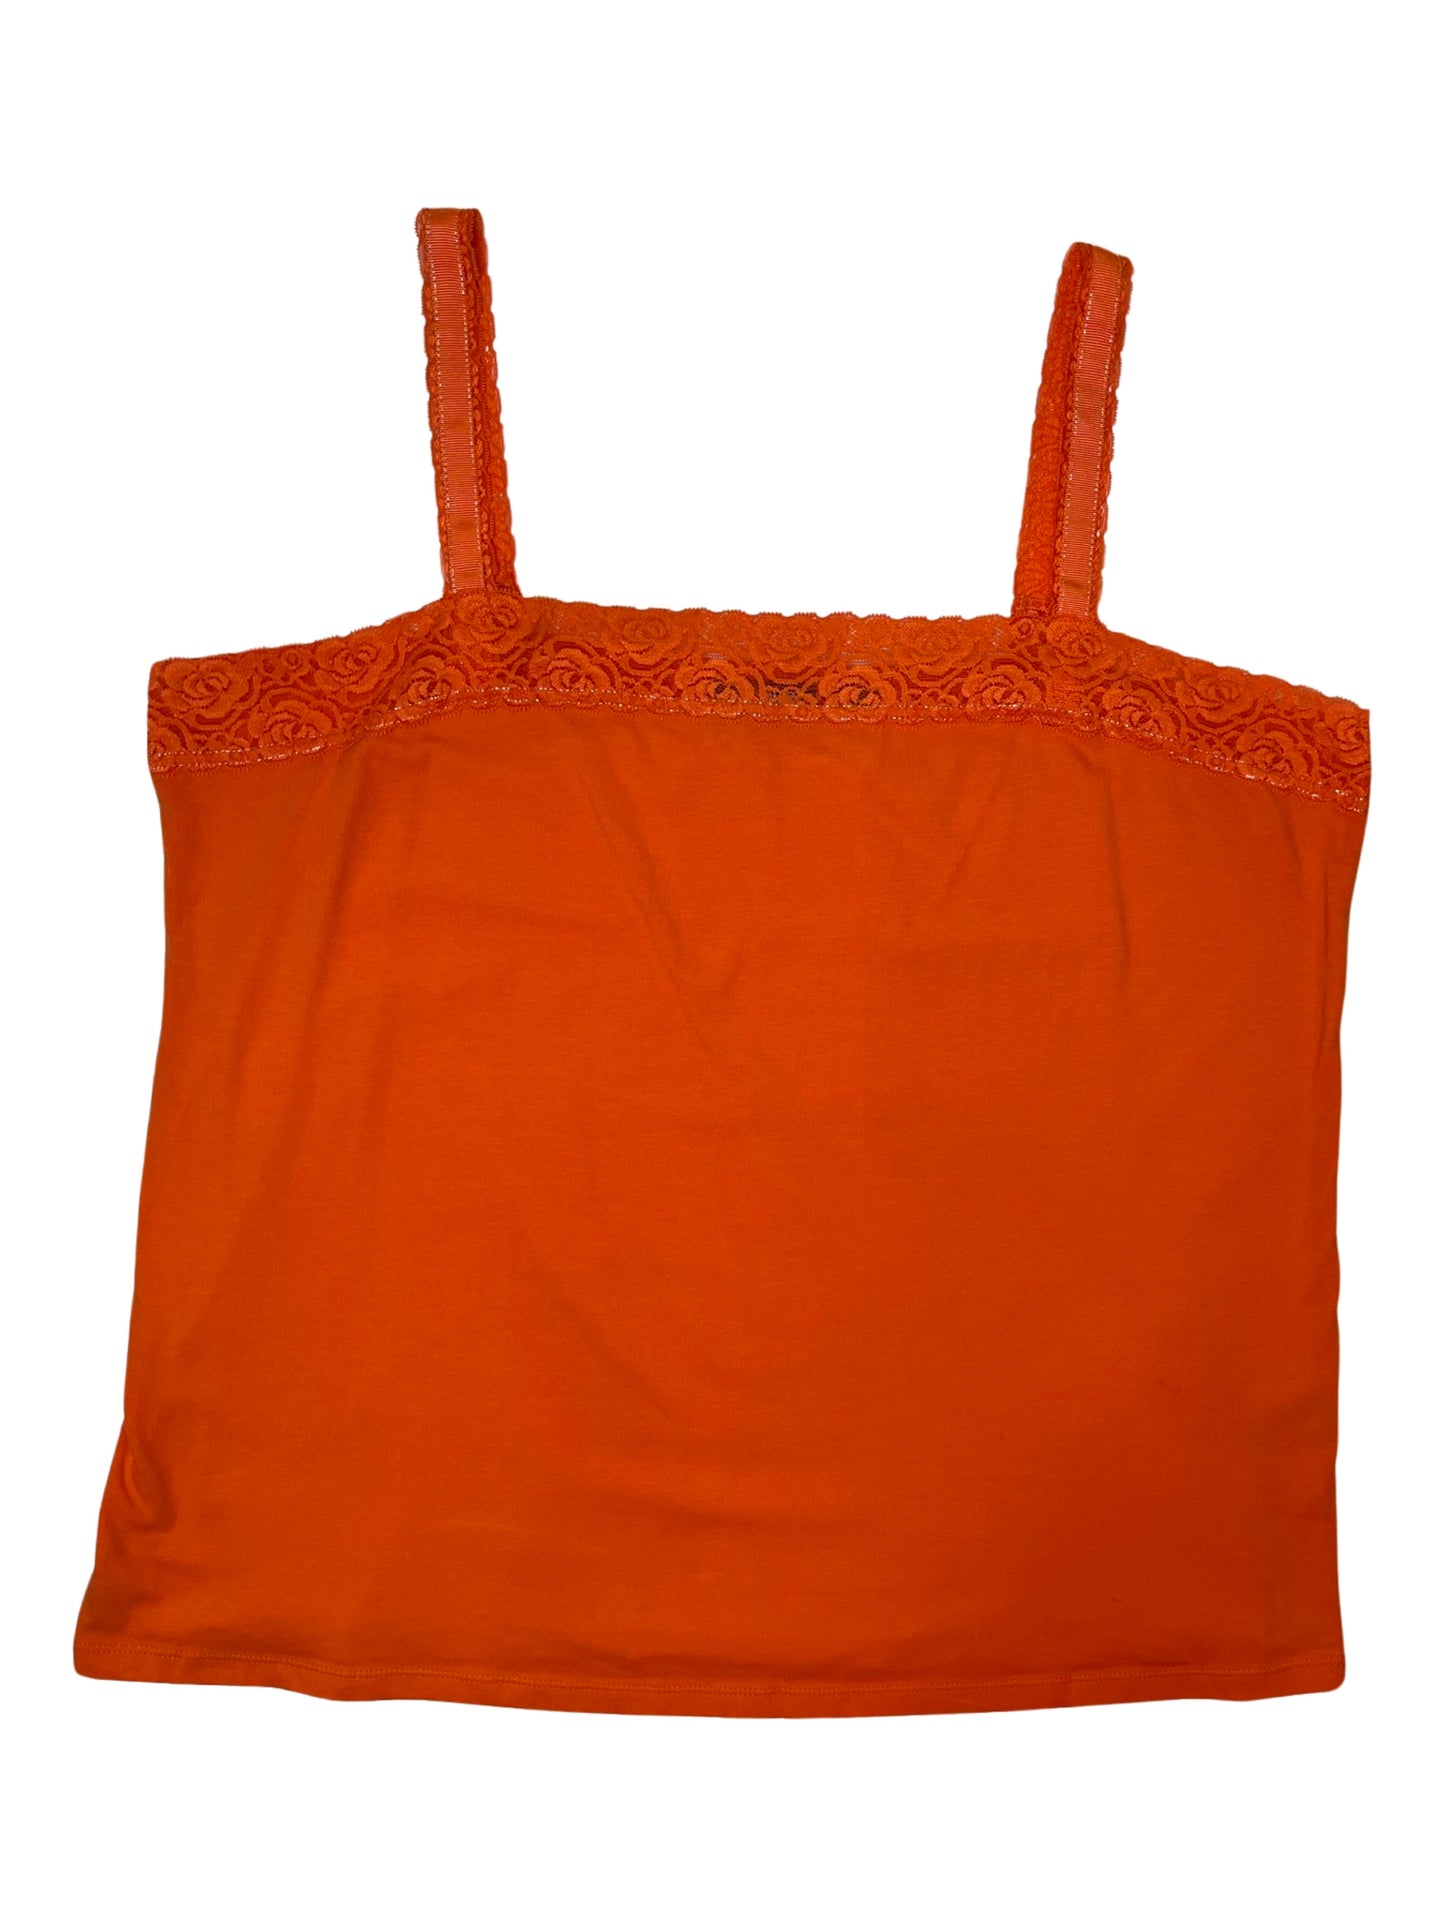 Y2K Orange Lace Camisole